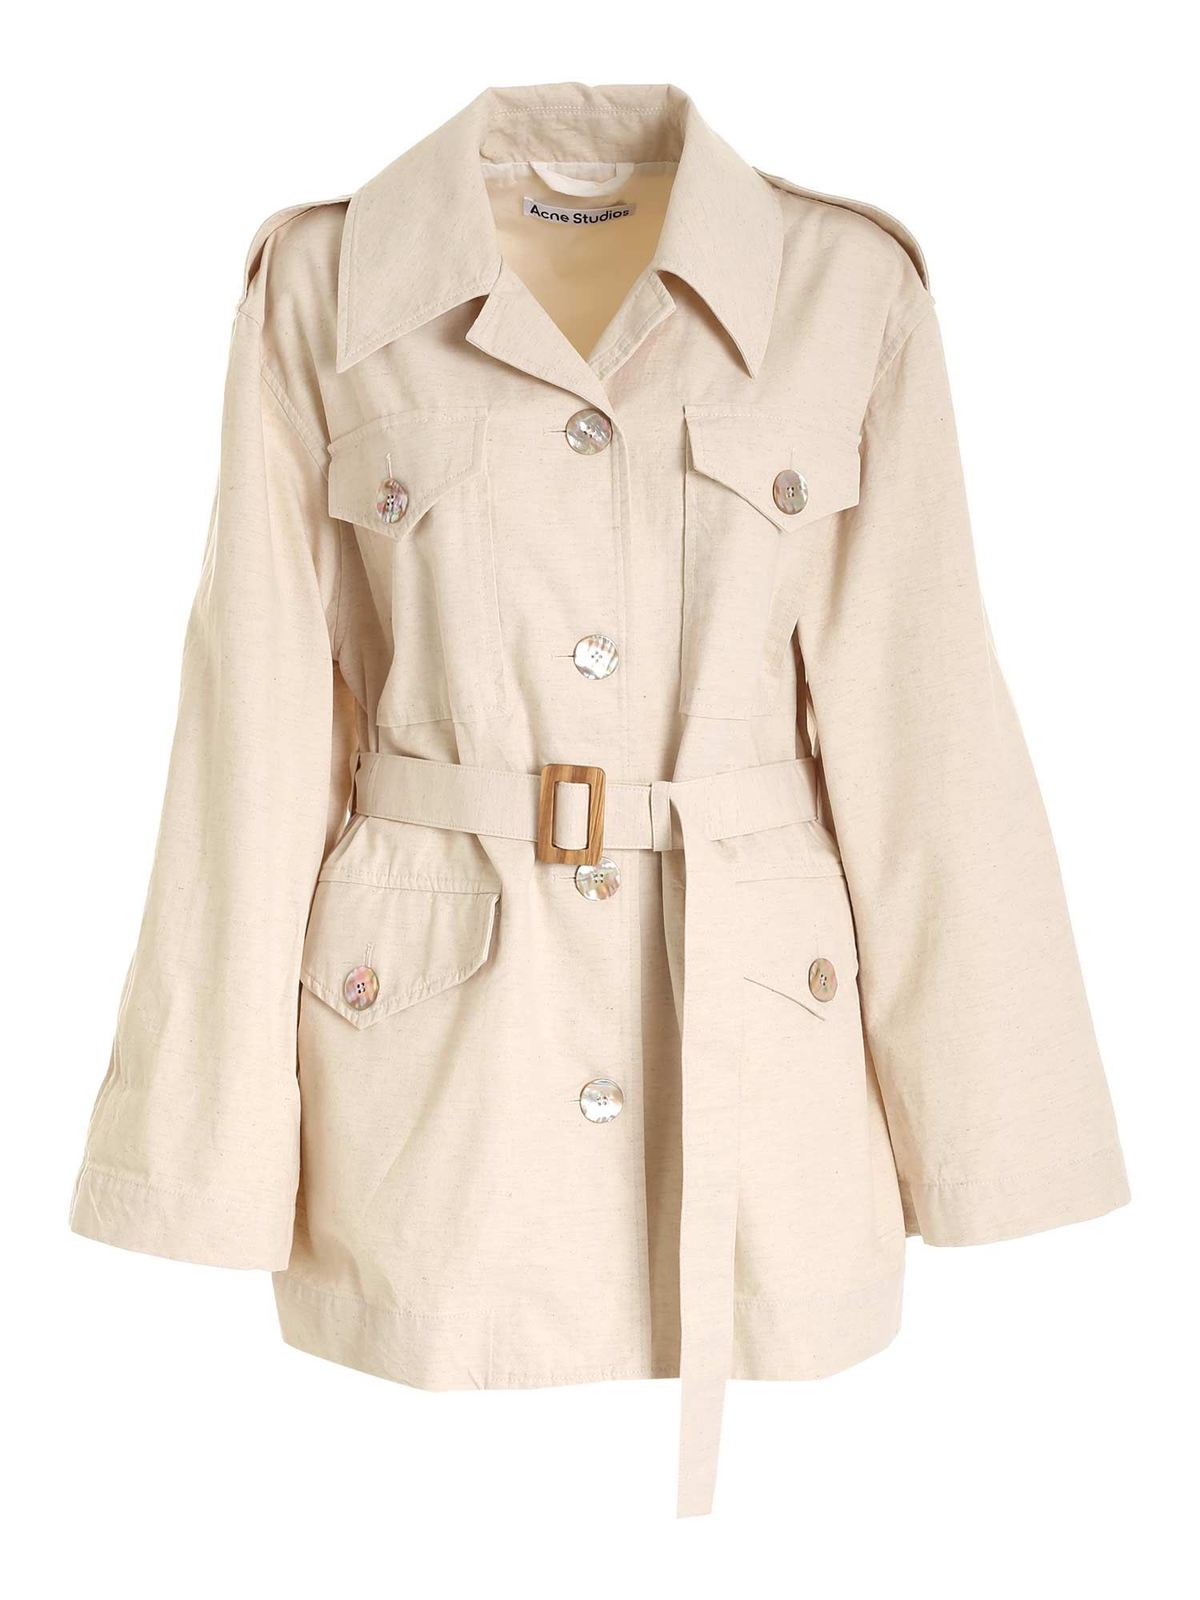 Short coats Acne Studios - Belt jacket in cream color - A90347CREAMBEIGE